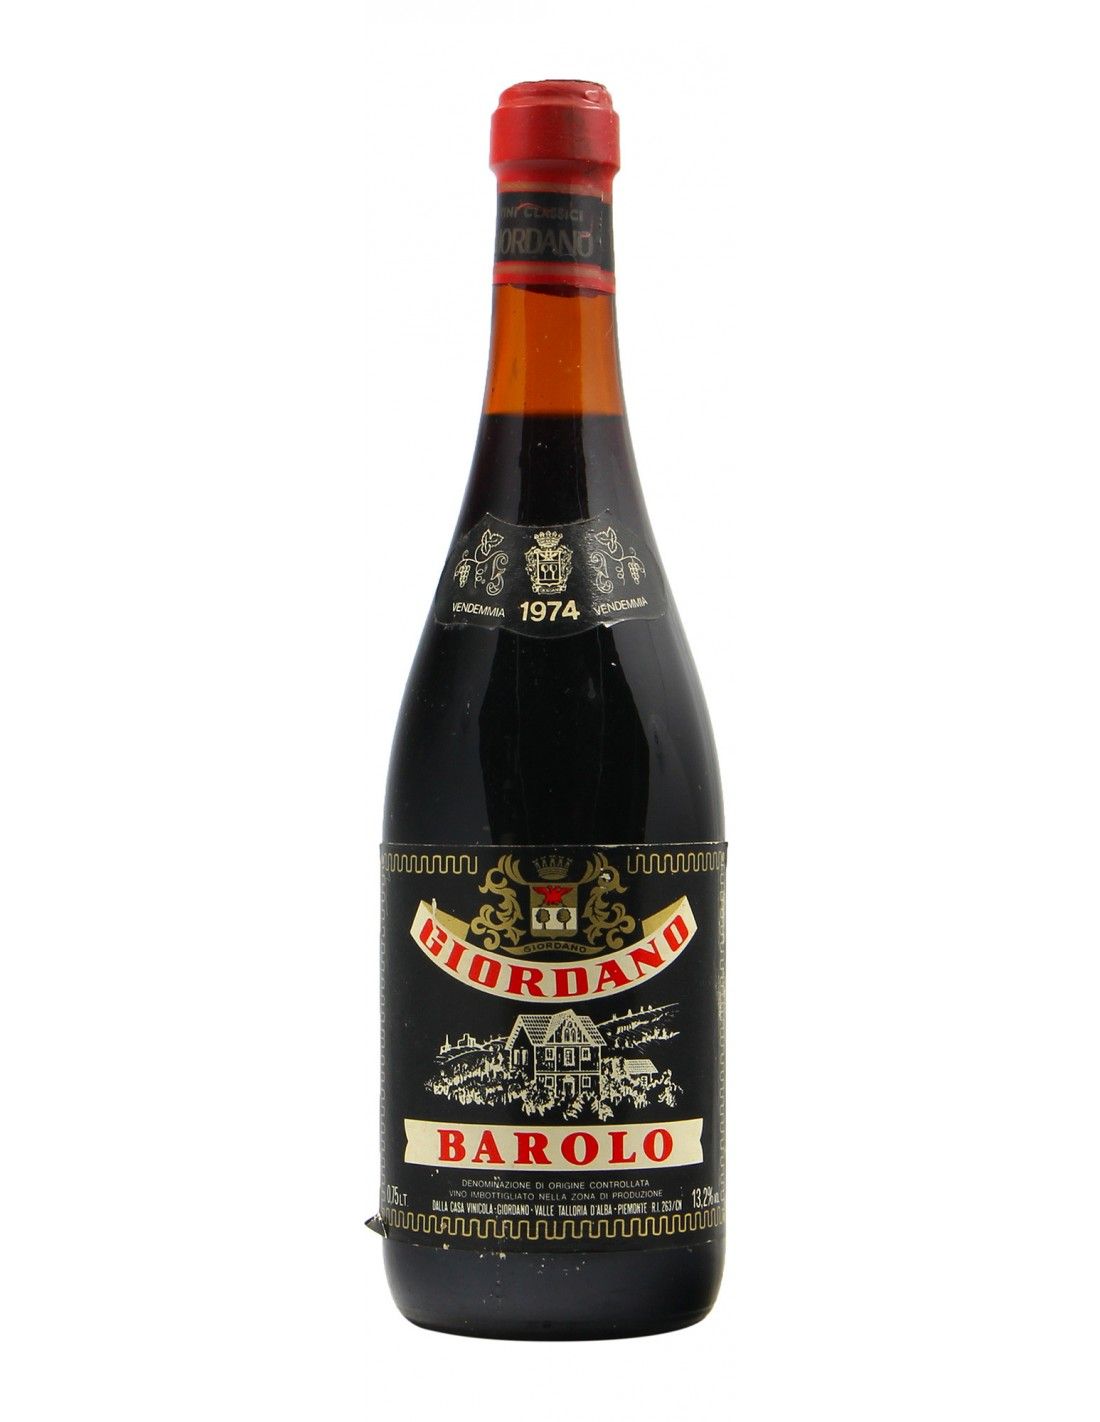 BAROLO 1974 GIORDANO Grandi Bottiglie